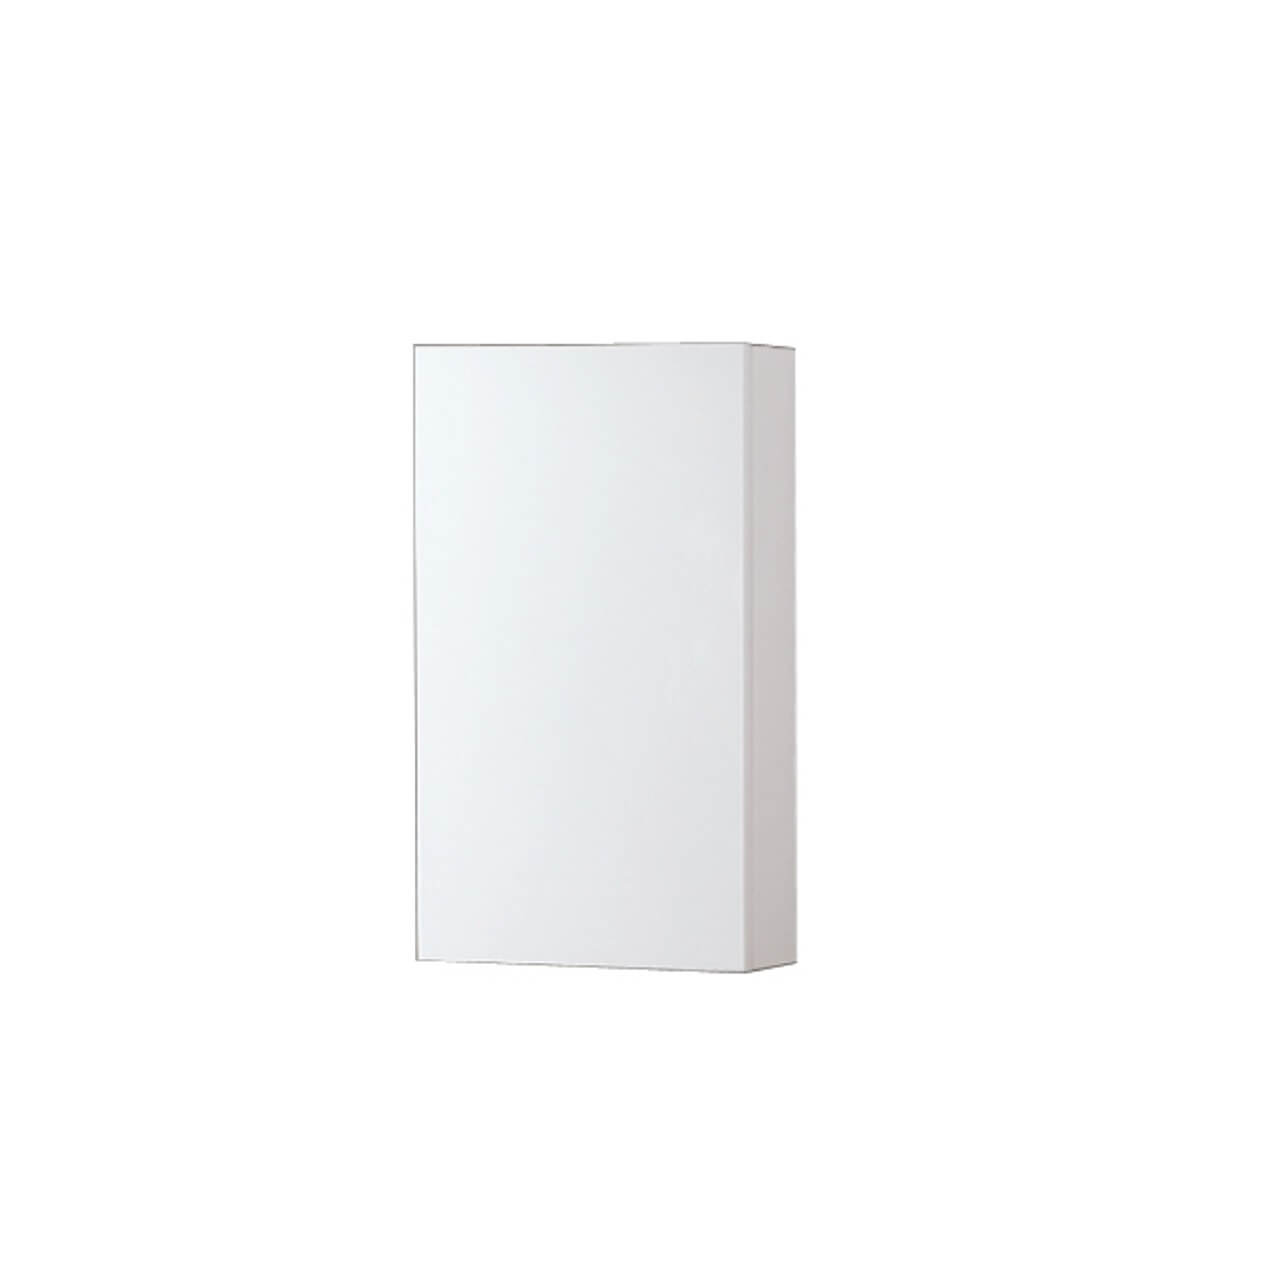 KUBEBATH Bliss ALT24-GW 14" Wall Mount Bathroom Side Linen Cabinet in High Gloss White, View 1